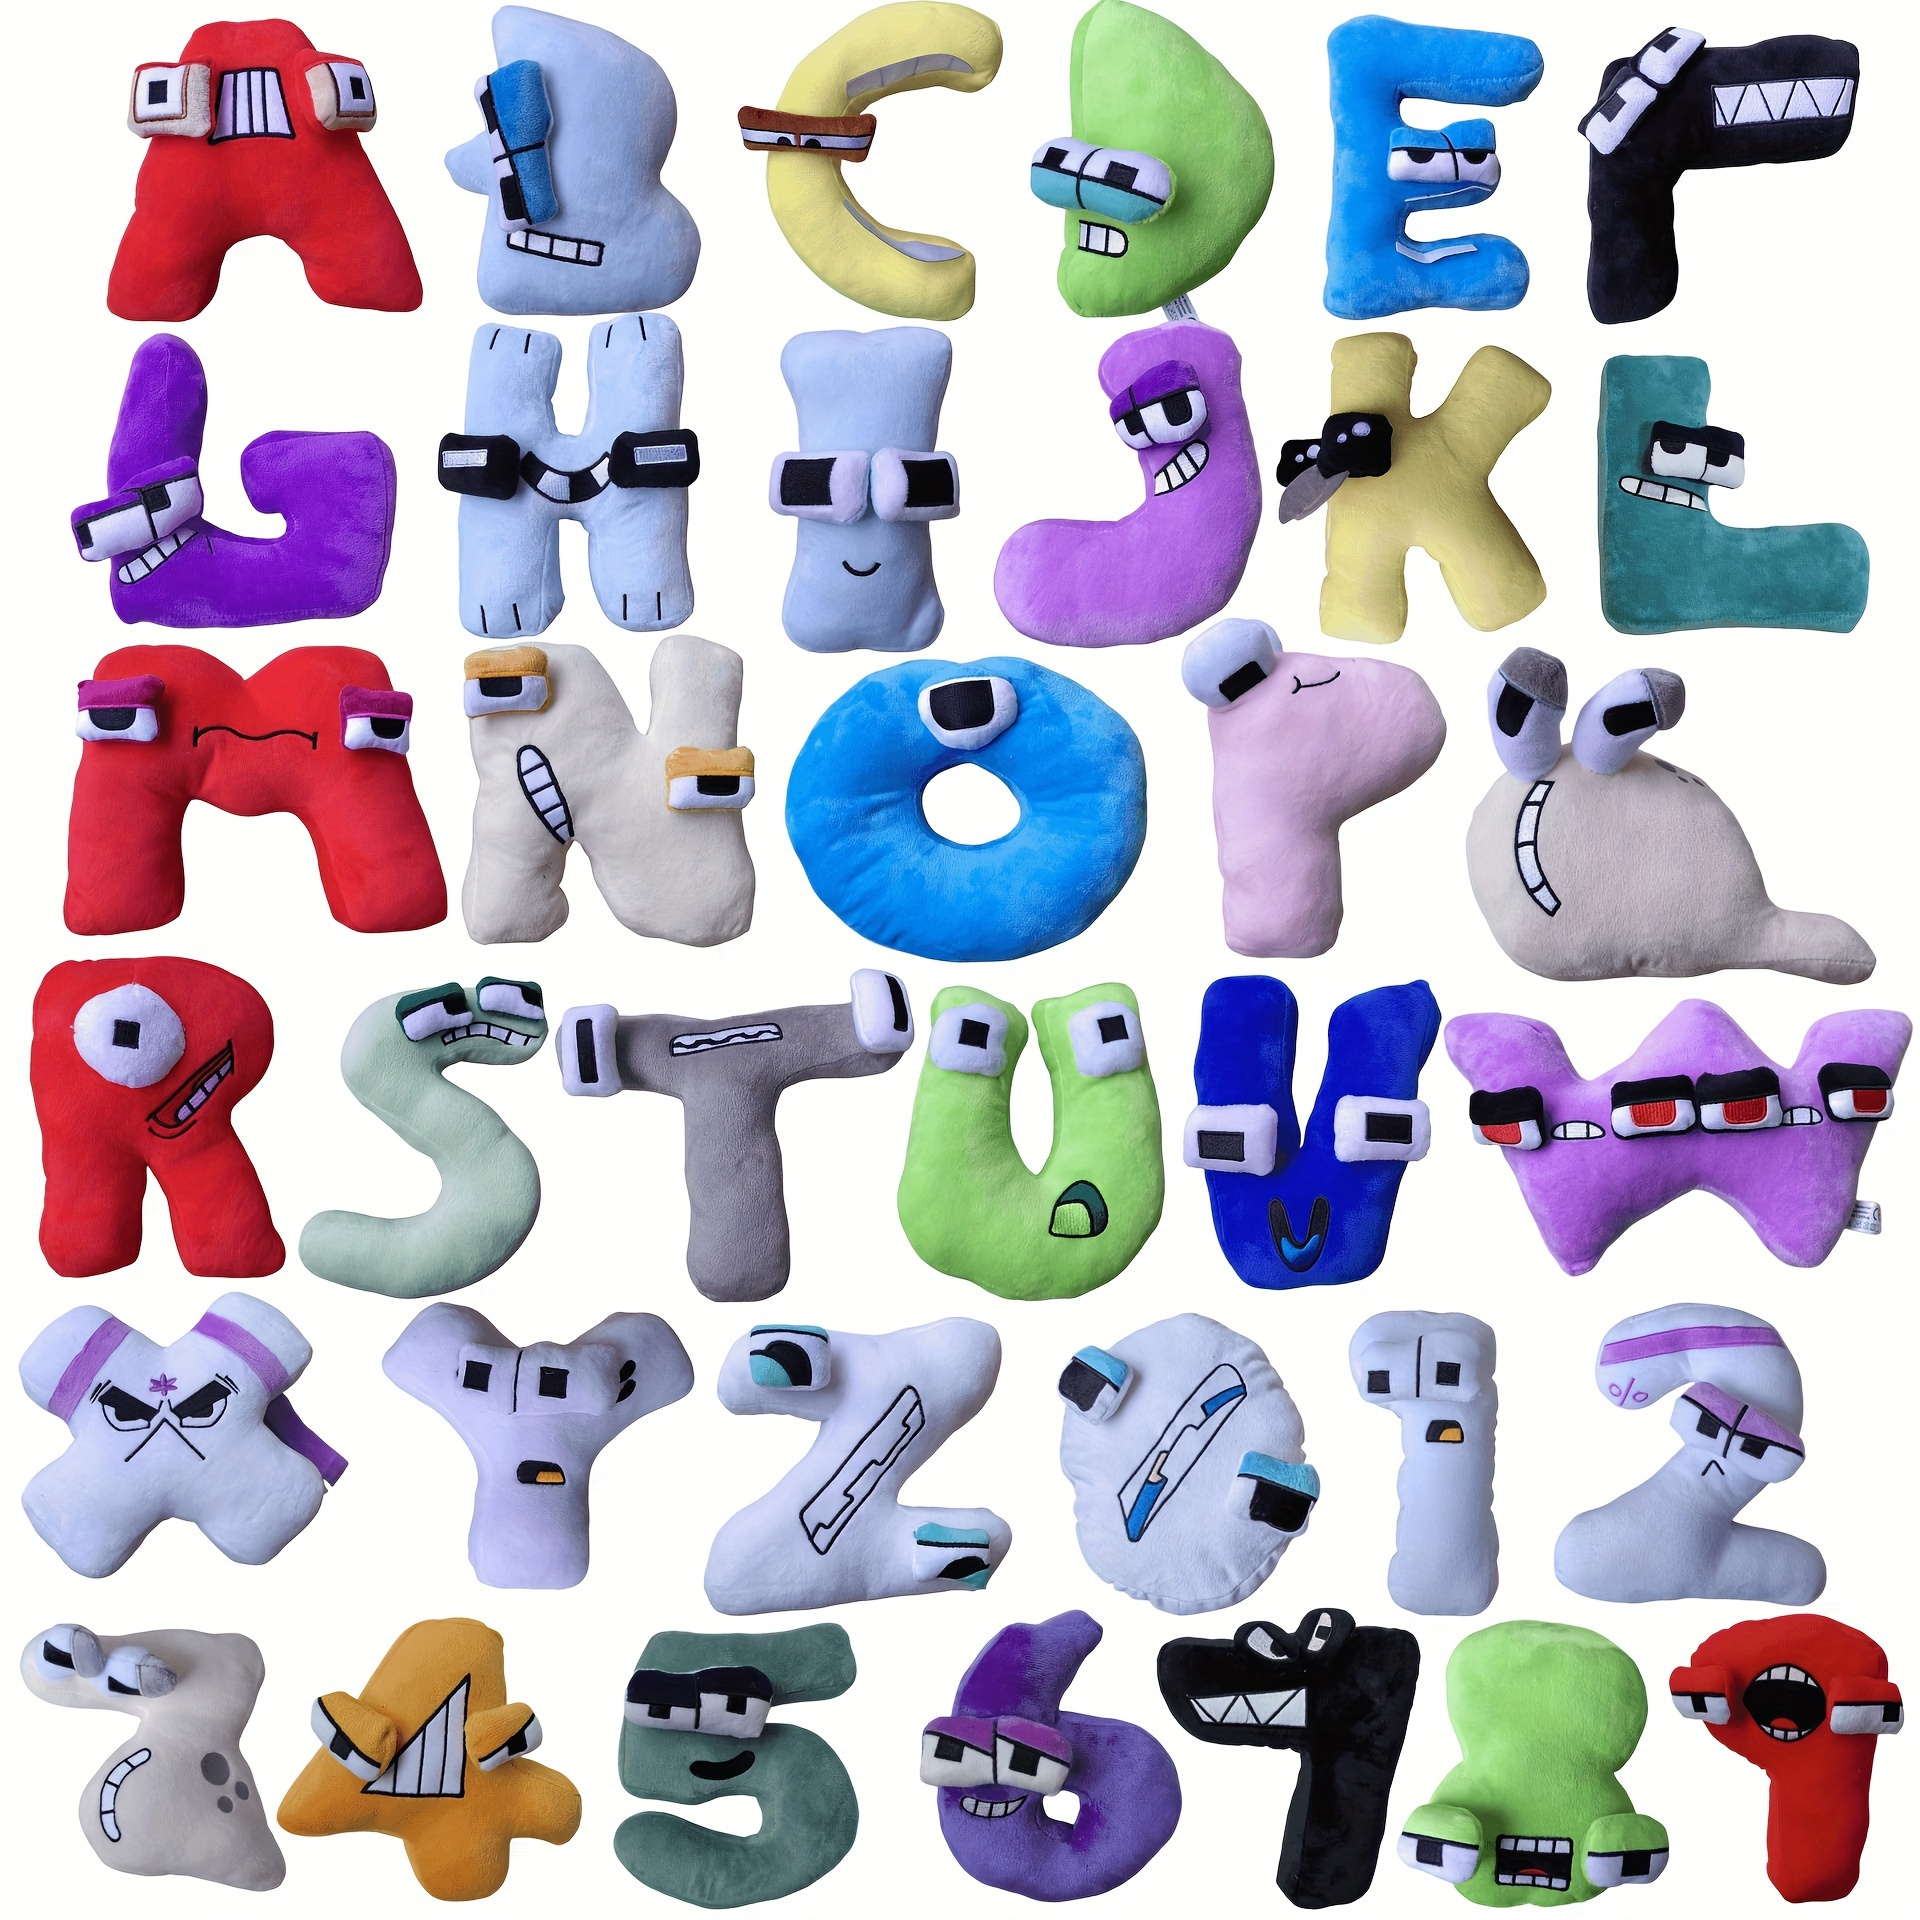 Alphabet Lore Keychain Toys - Alphabet Lore Pendant - Funny